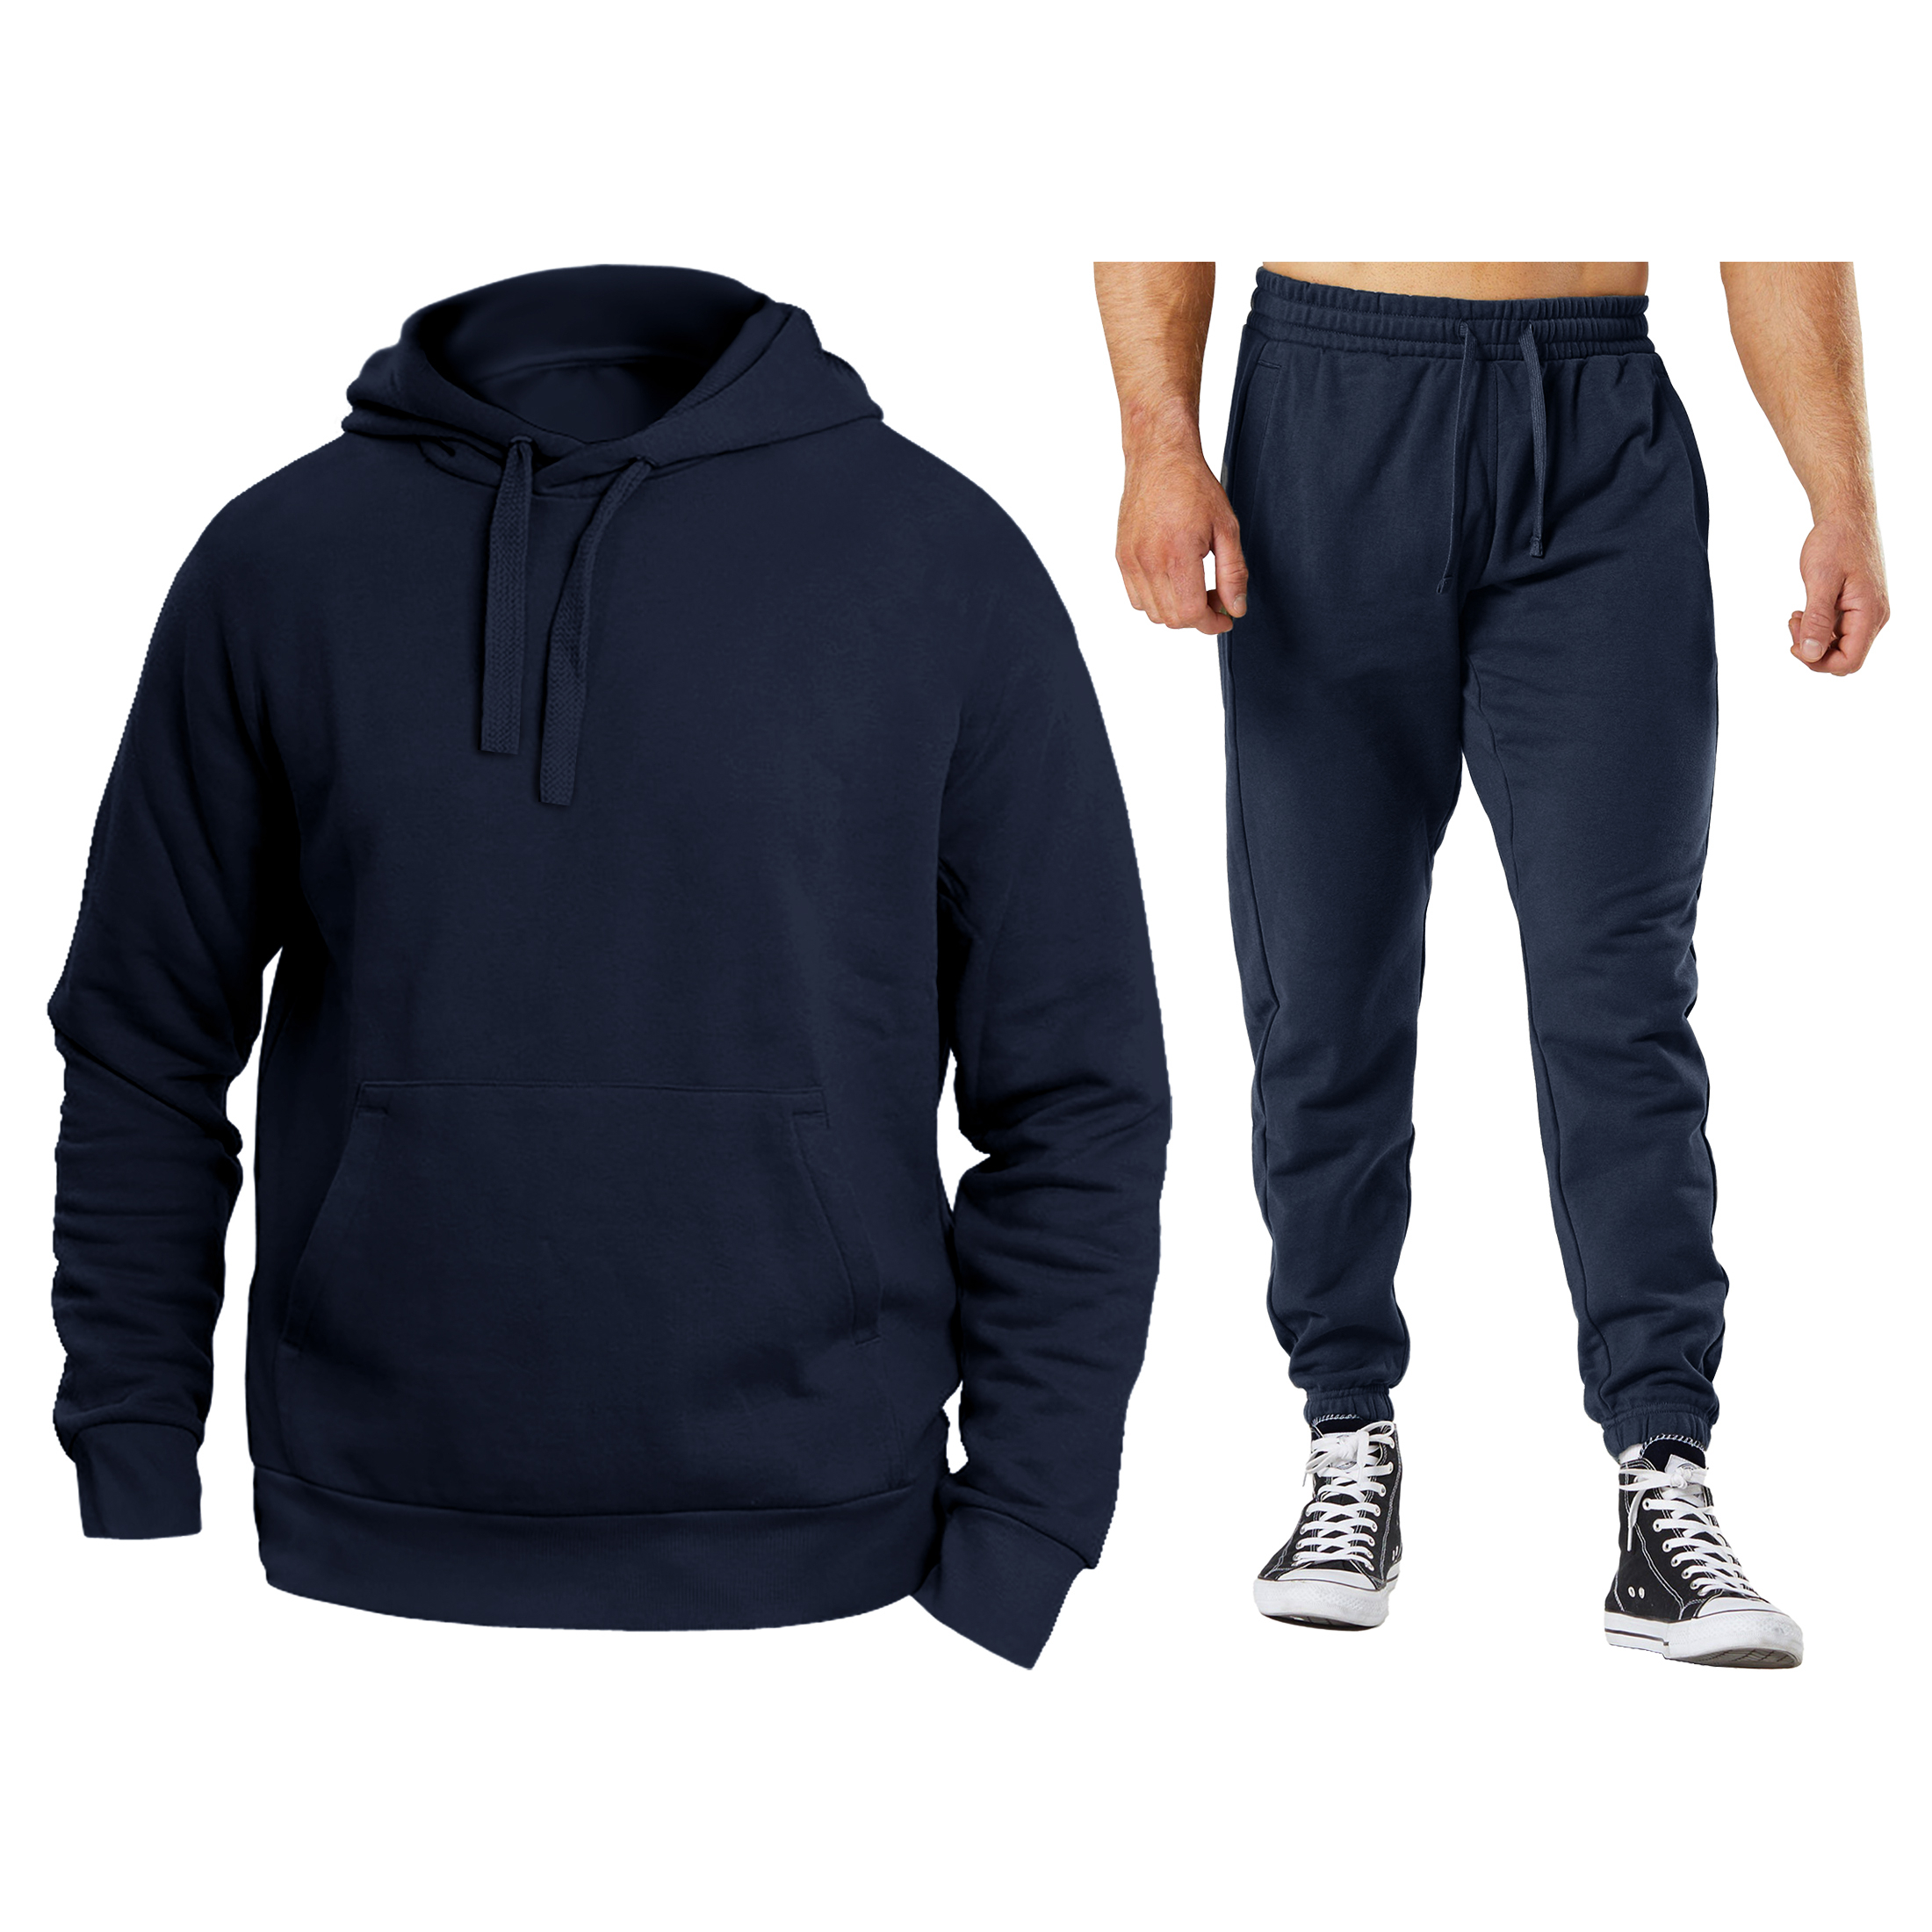 Men's Athletic Warm Jogging Pullover Active Sweatsuit - Black, Small